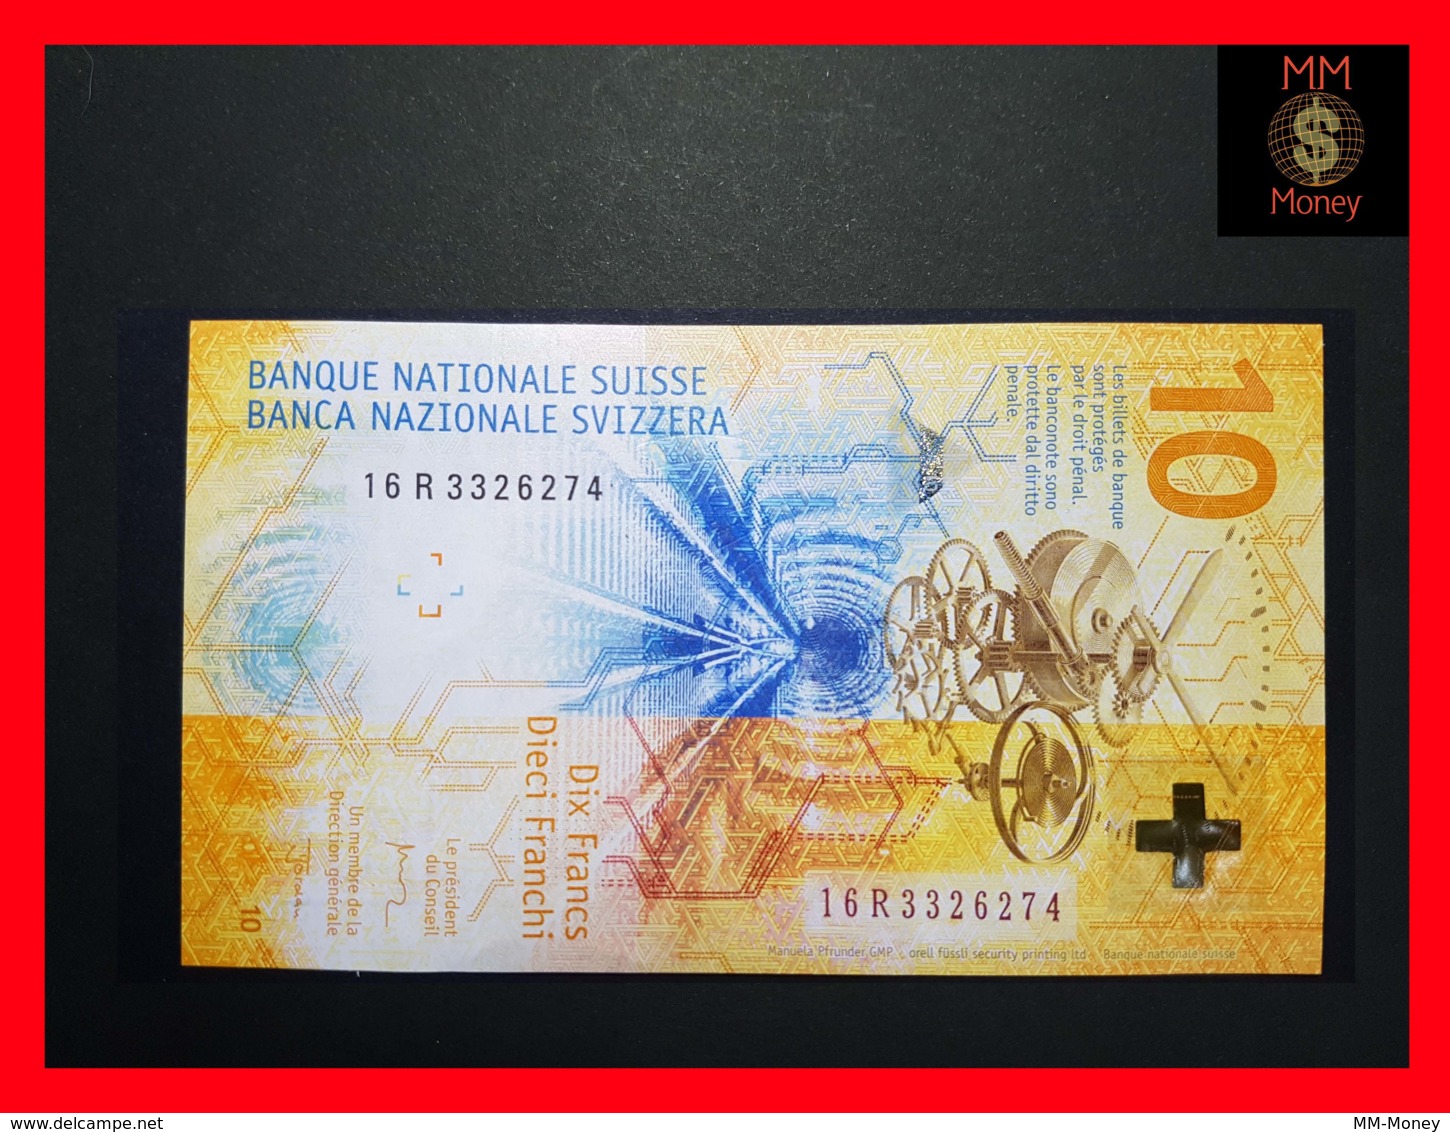 SWITZERLAND 10 Francs 2016 P. 75 UNC - Switzerland